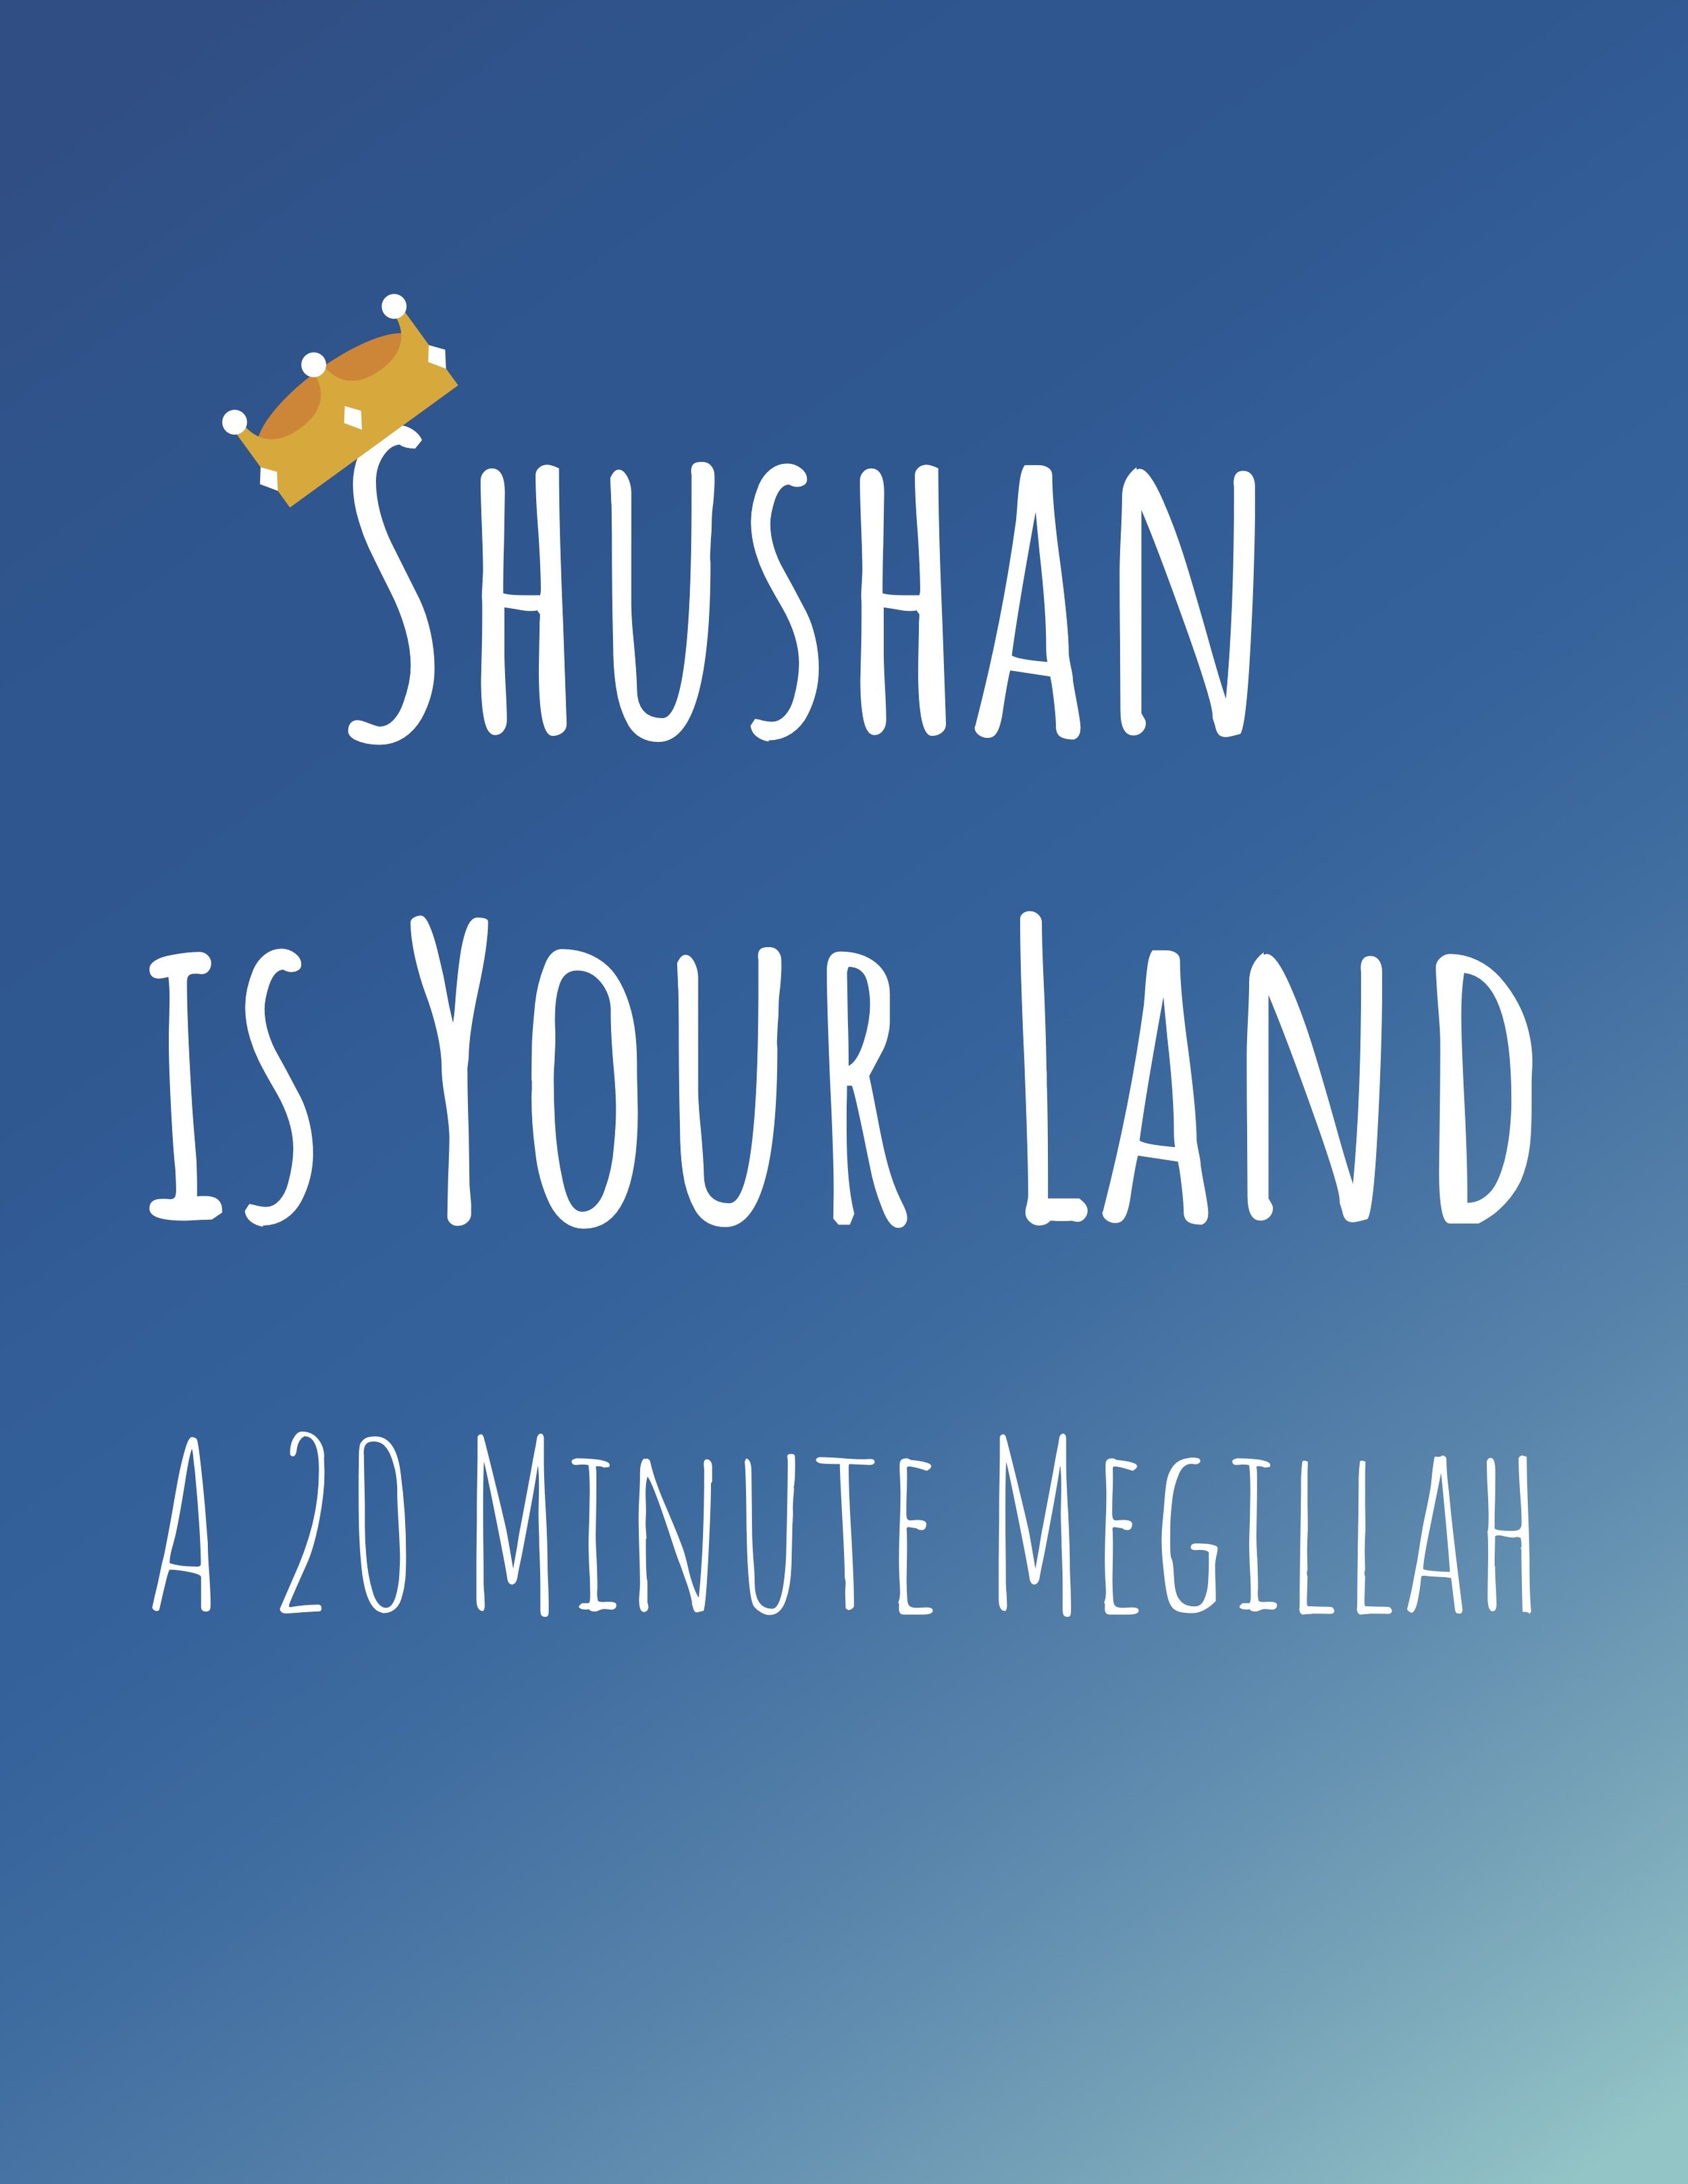 Shushan is Your Land poster.jpg